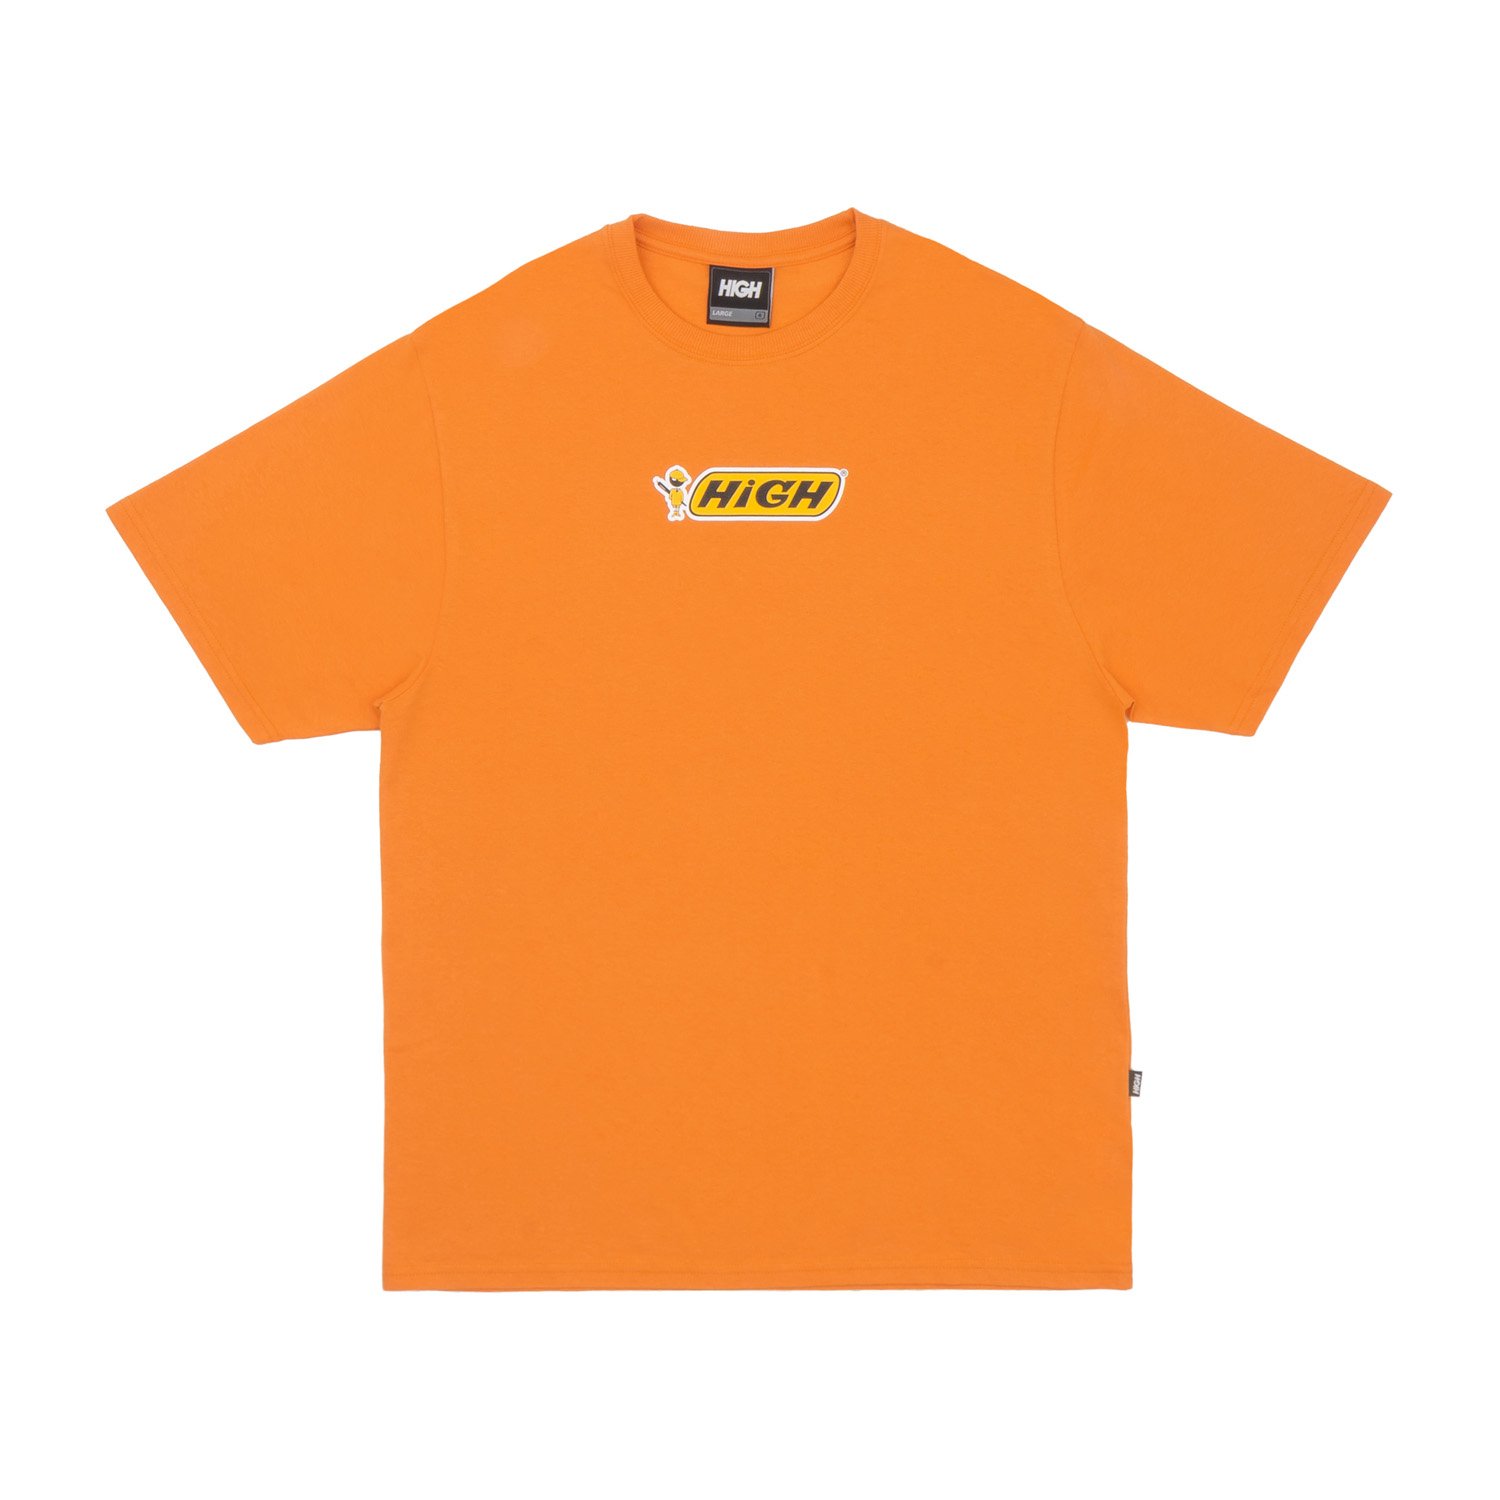 https://static.rockcity.com.br/public/rockcity/imagens/produtos/camiseta-high-company-flik-laranja-647114dc8ccc5.jpg